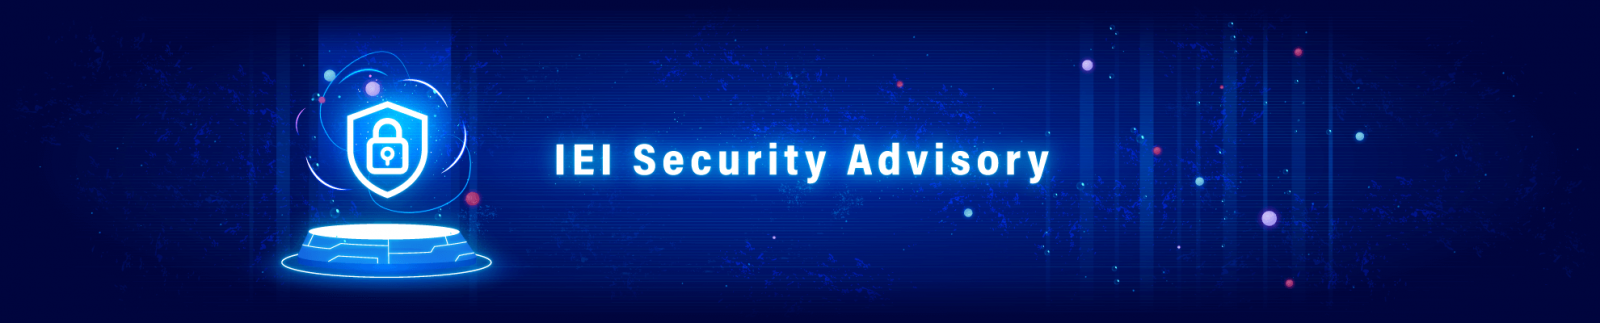 IEI Security Advisory